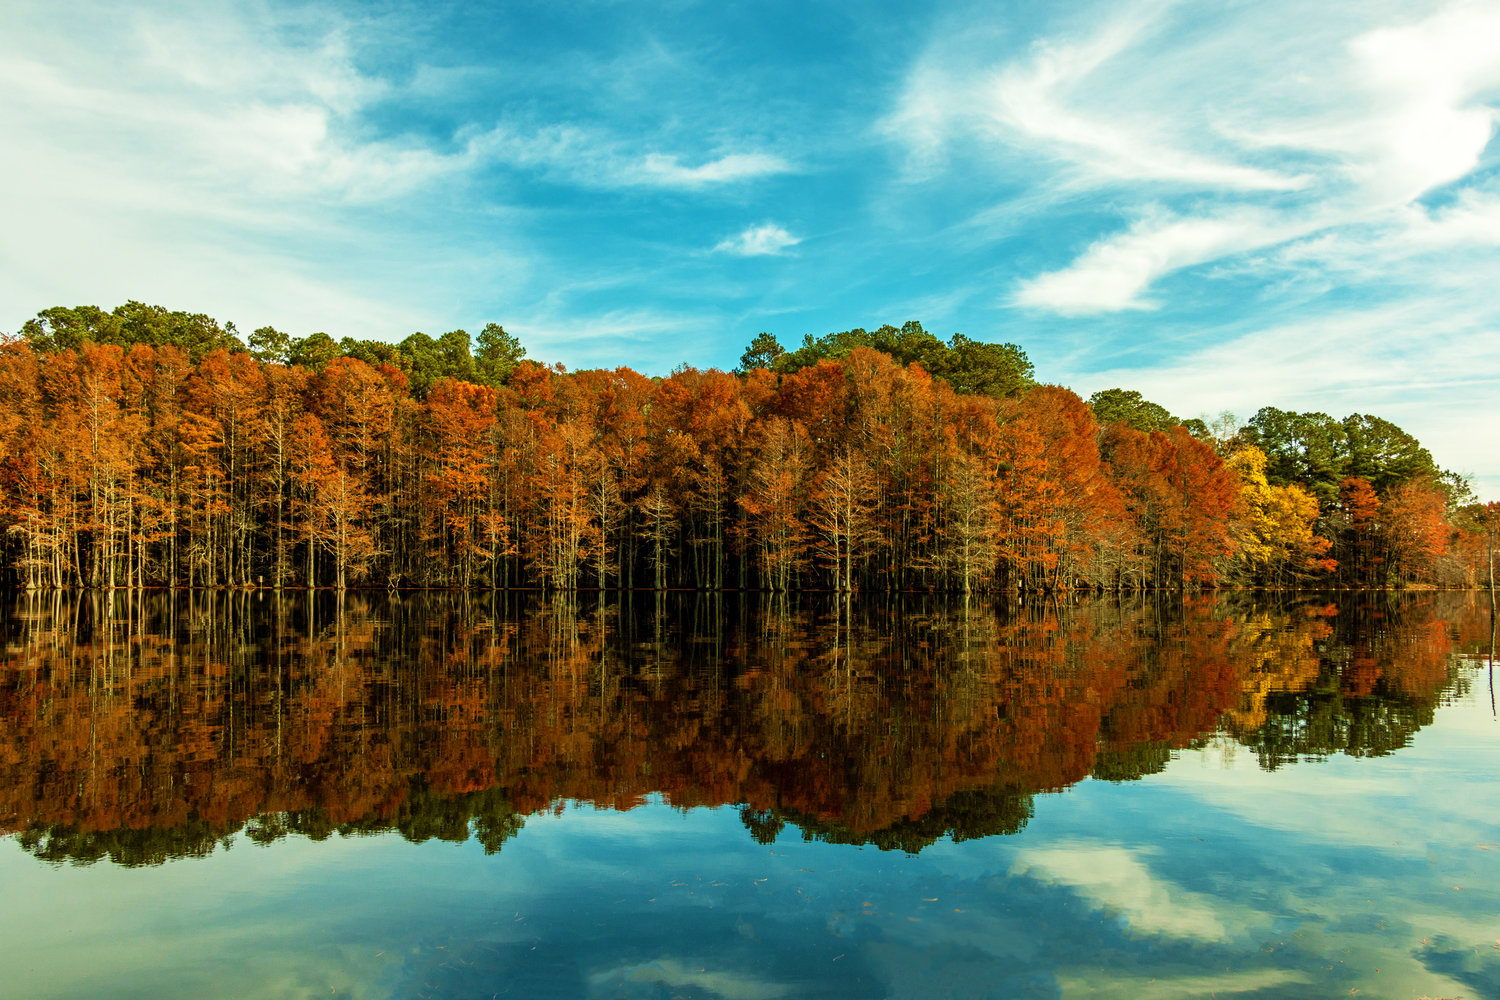 This peaceful setting shows Glenville Lake at Mazarick Park during peak foliage season.